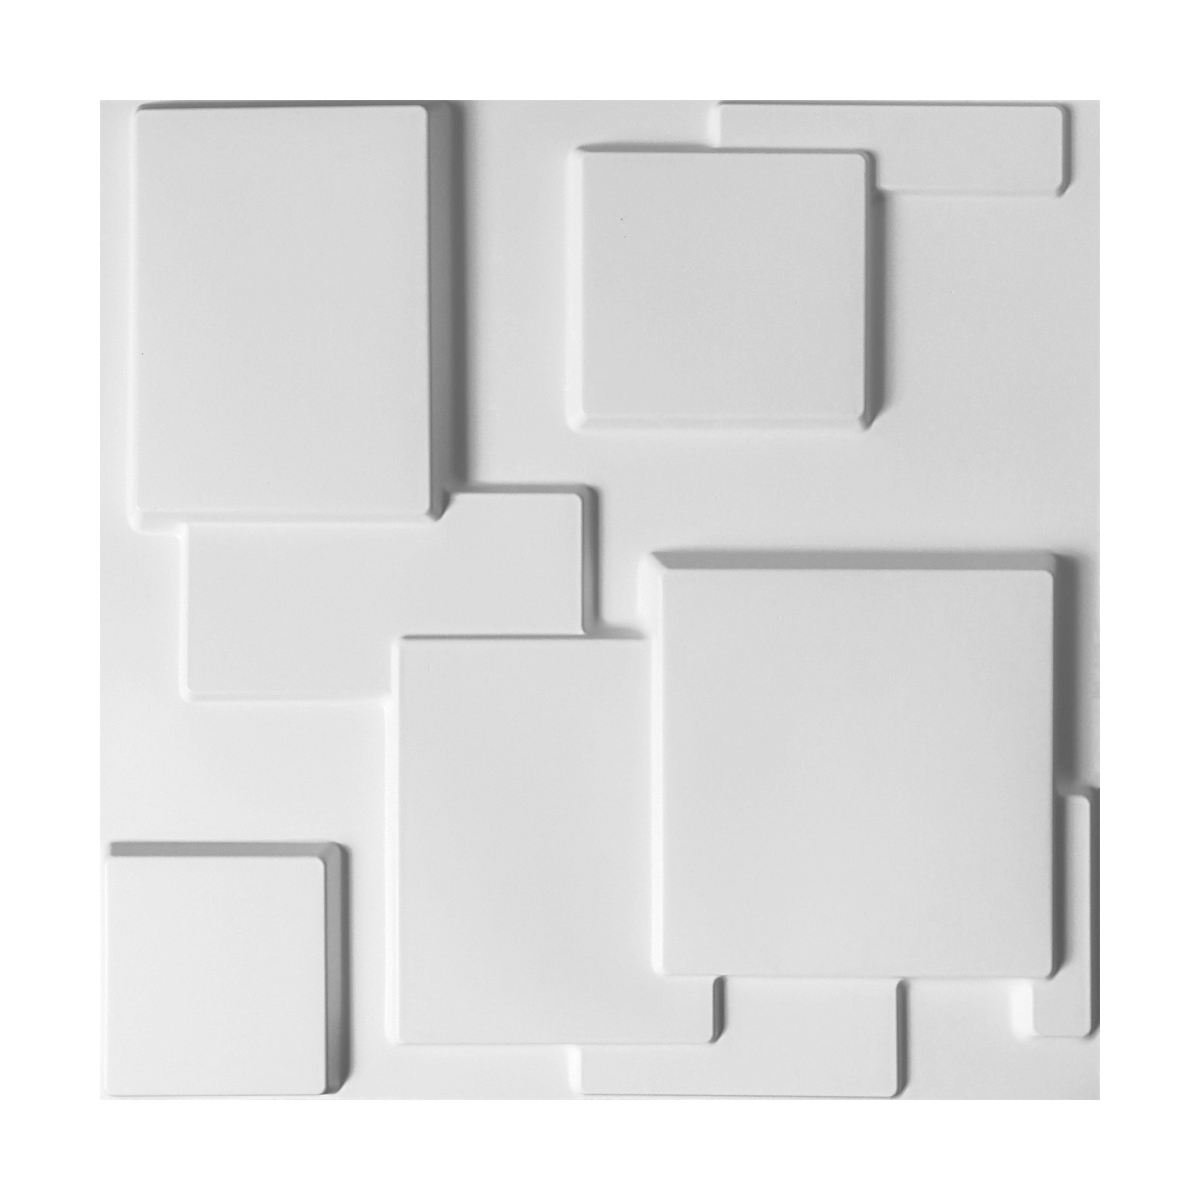 A10033 - Decorative Tiles 3D Wall Panels, White Squares, 12 Tiles 32 SF